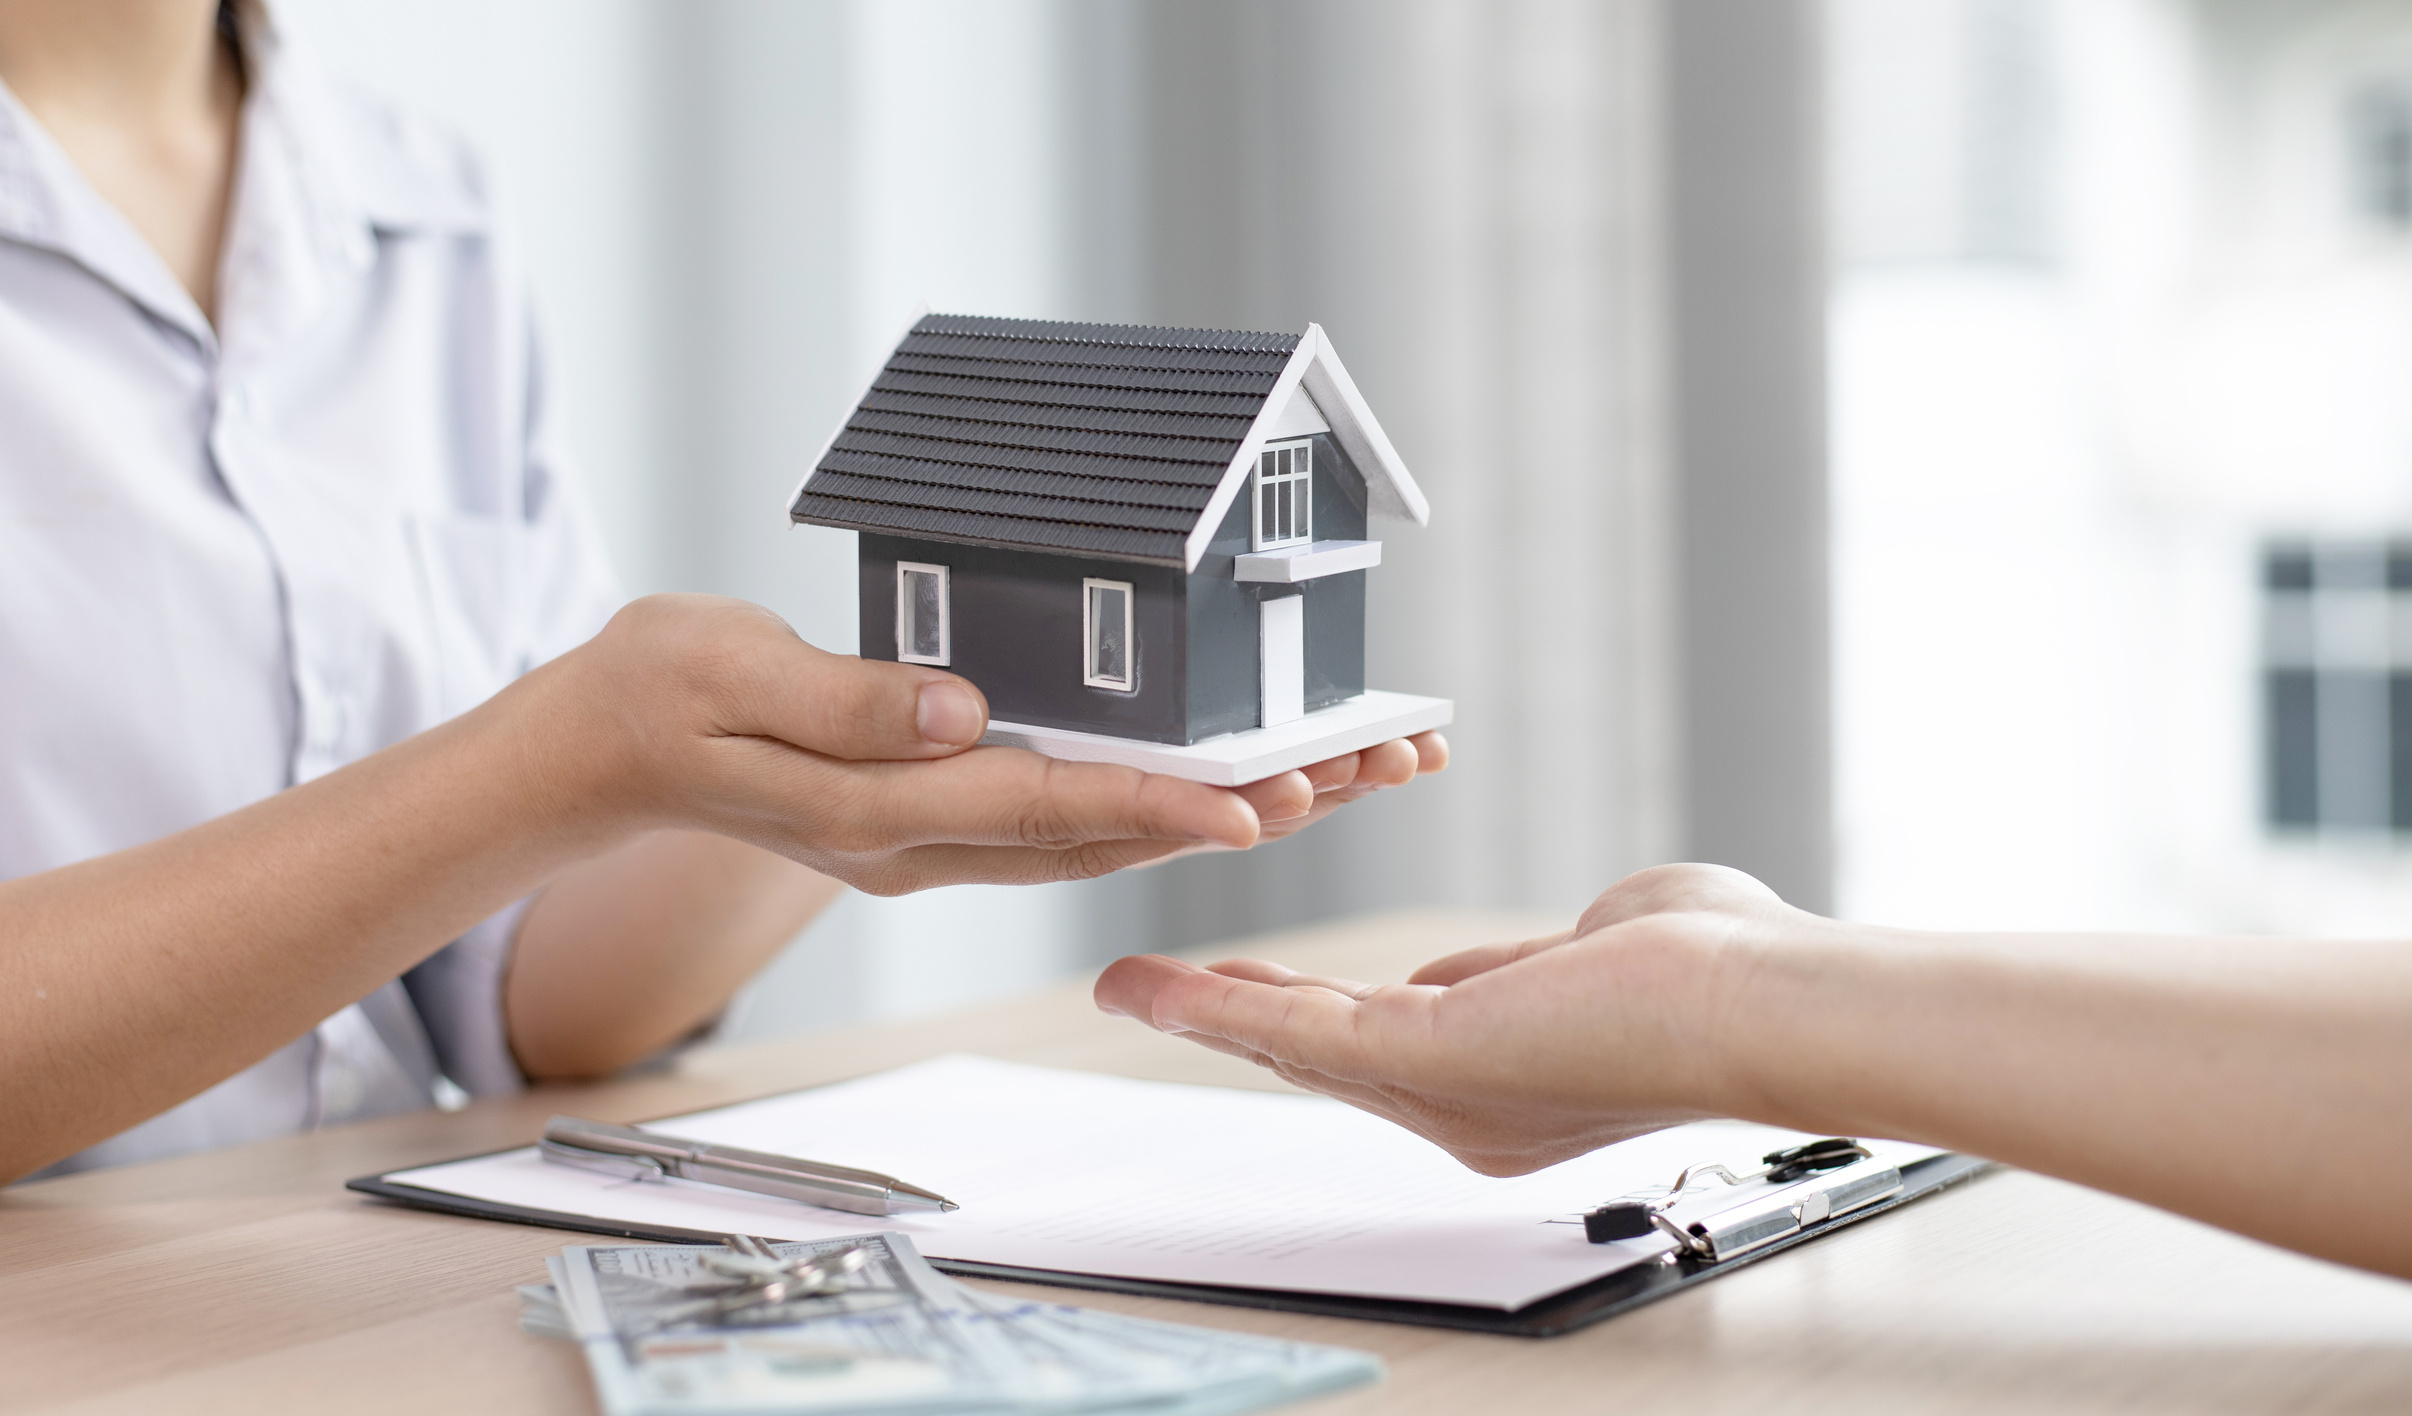 Concept Presentation of Home Insurance